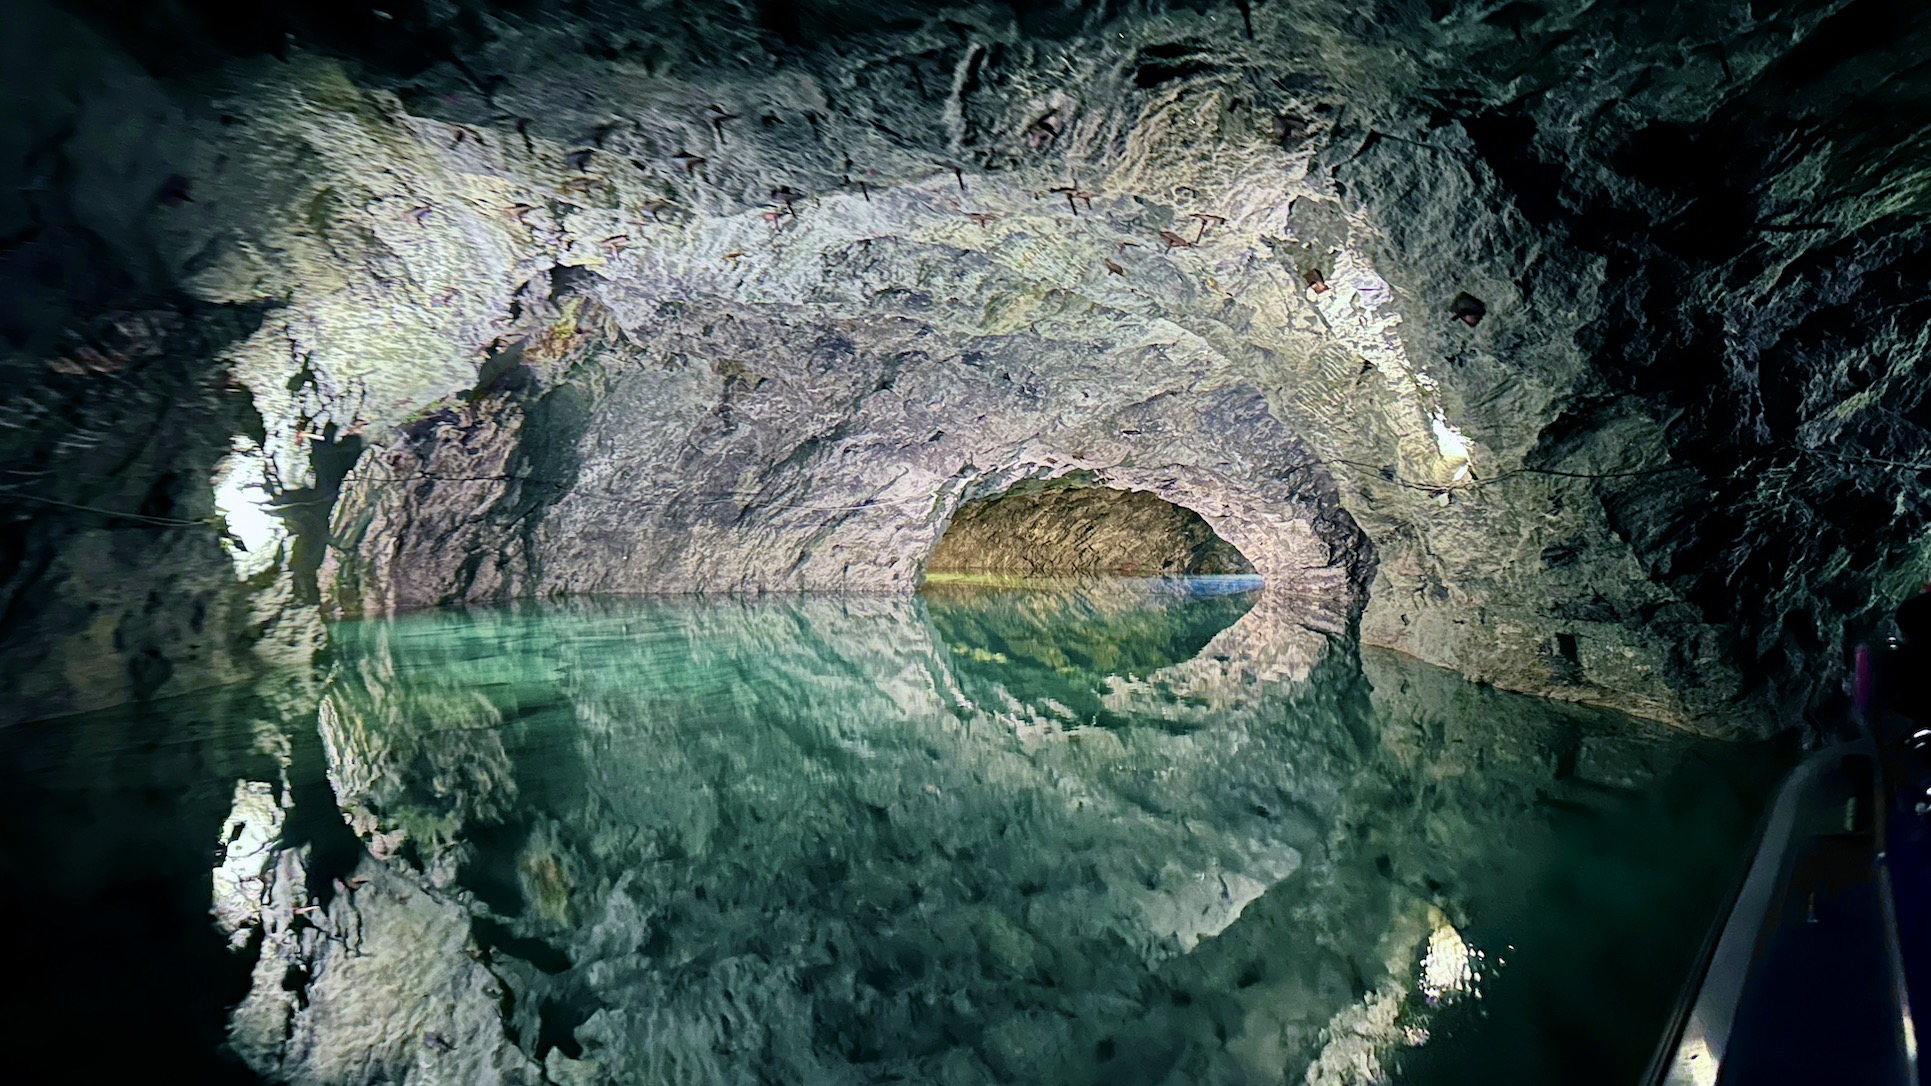 Europe's Largest Underground Lake, Seegrotte Hinterbrühl, Austria - Erika Brown Tour Guide